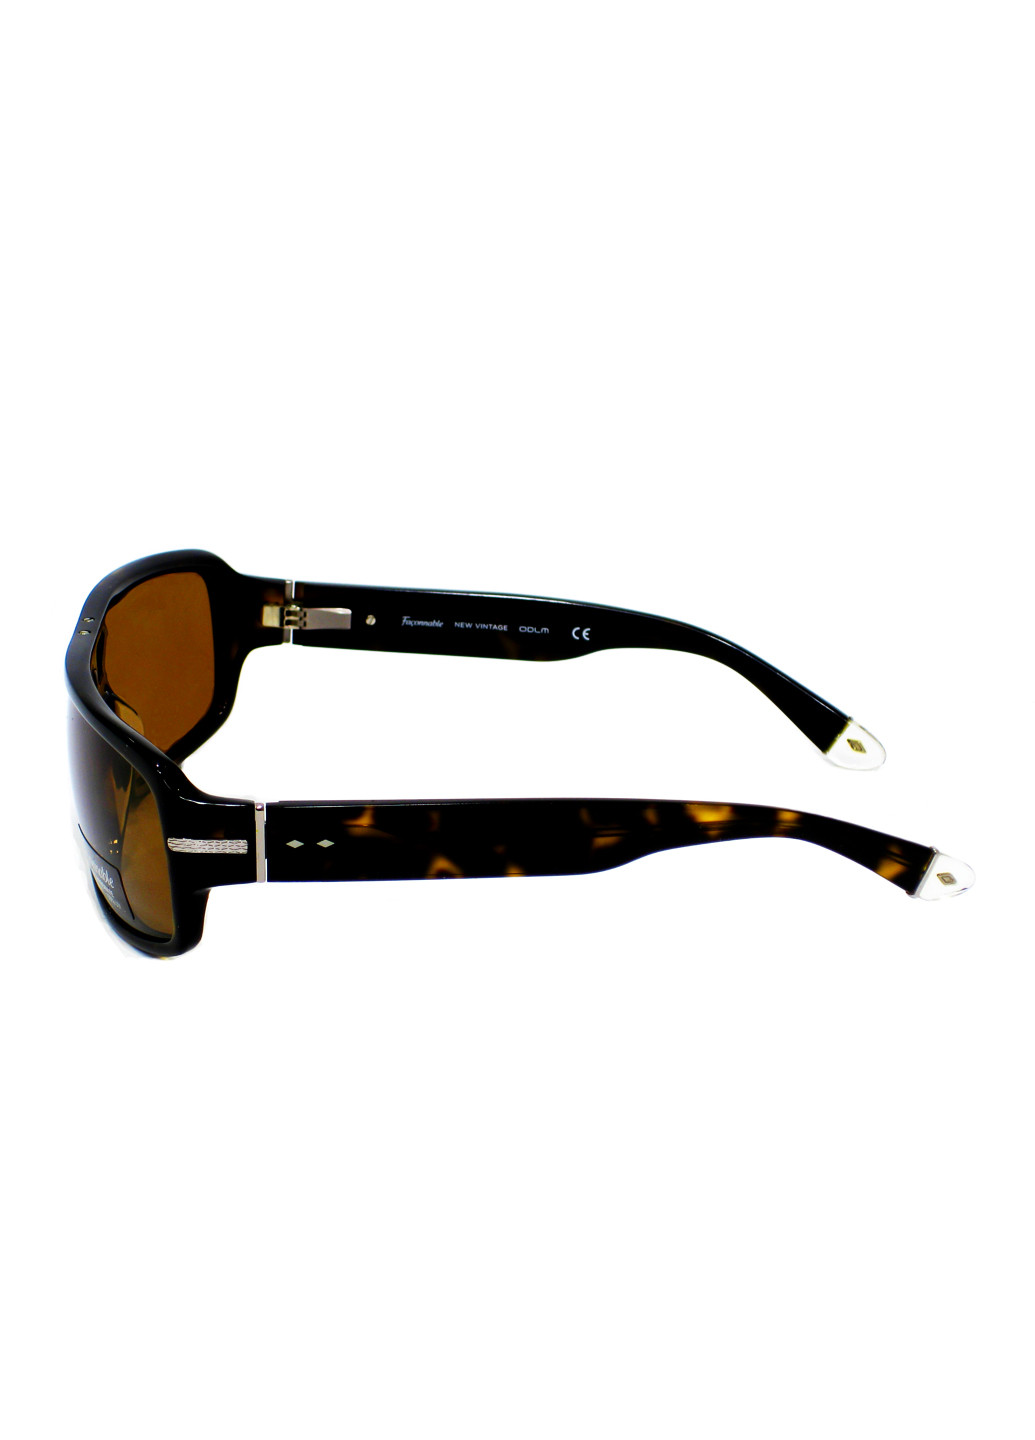 Cолнцезащитные очки Faconnable fv2960s 200p (205991969)